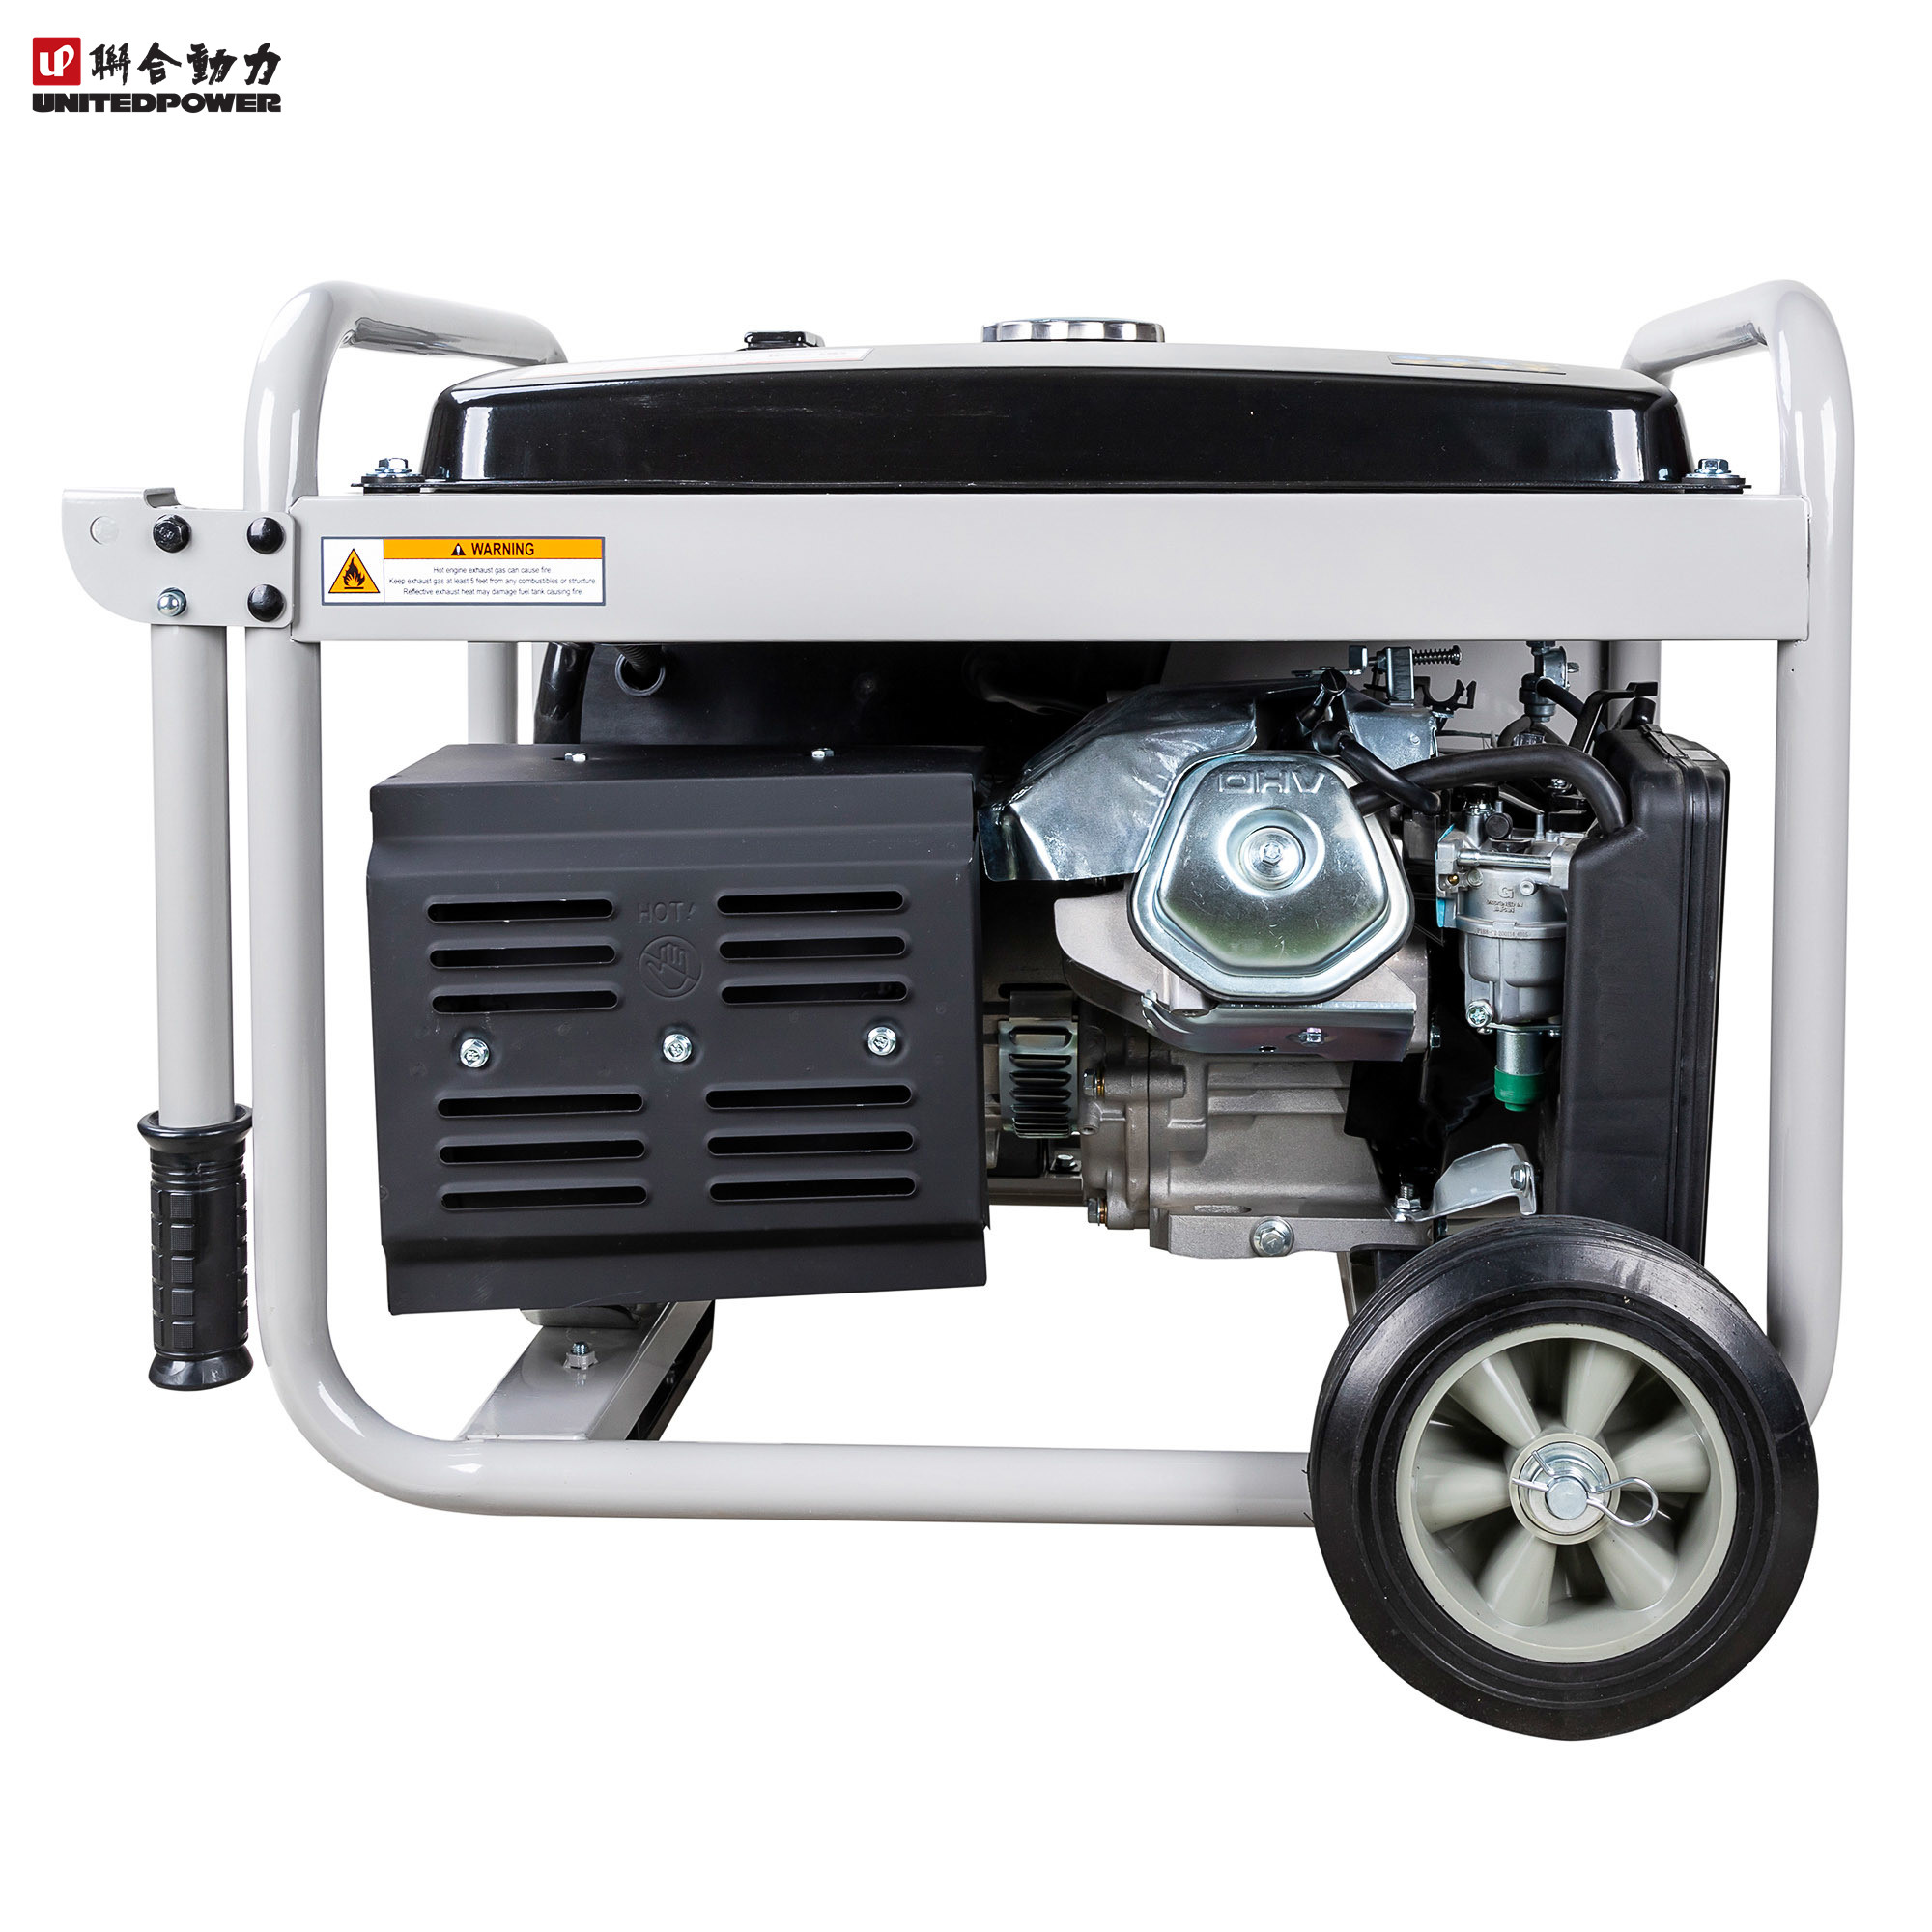 United Power Machinery Sdn Bhd - Here we have Gasoline Engine